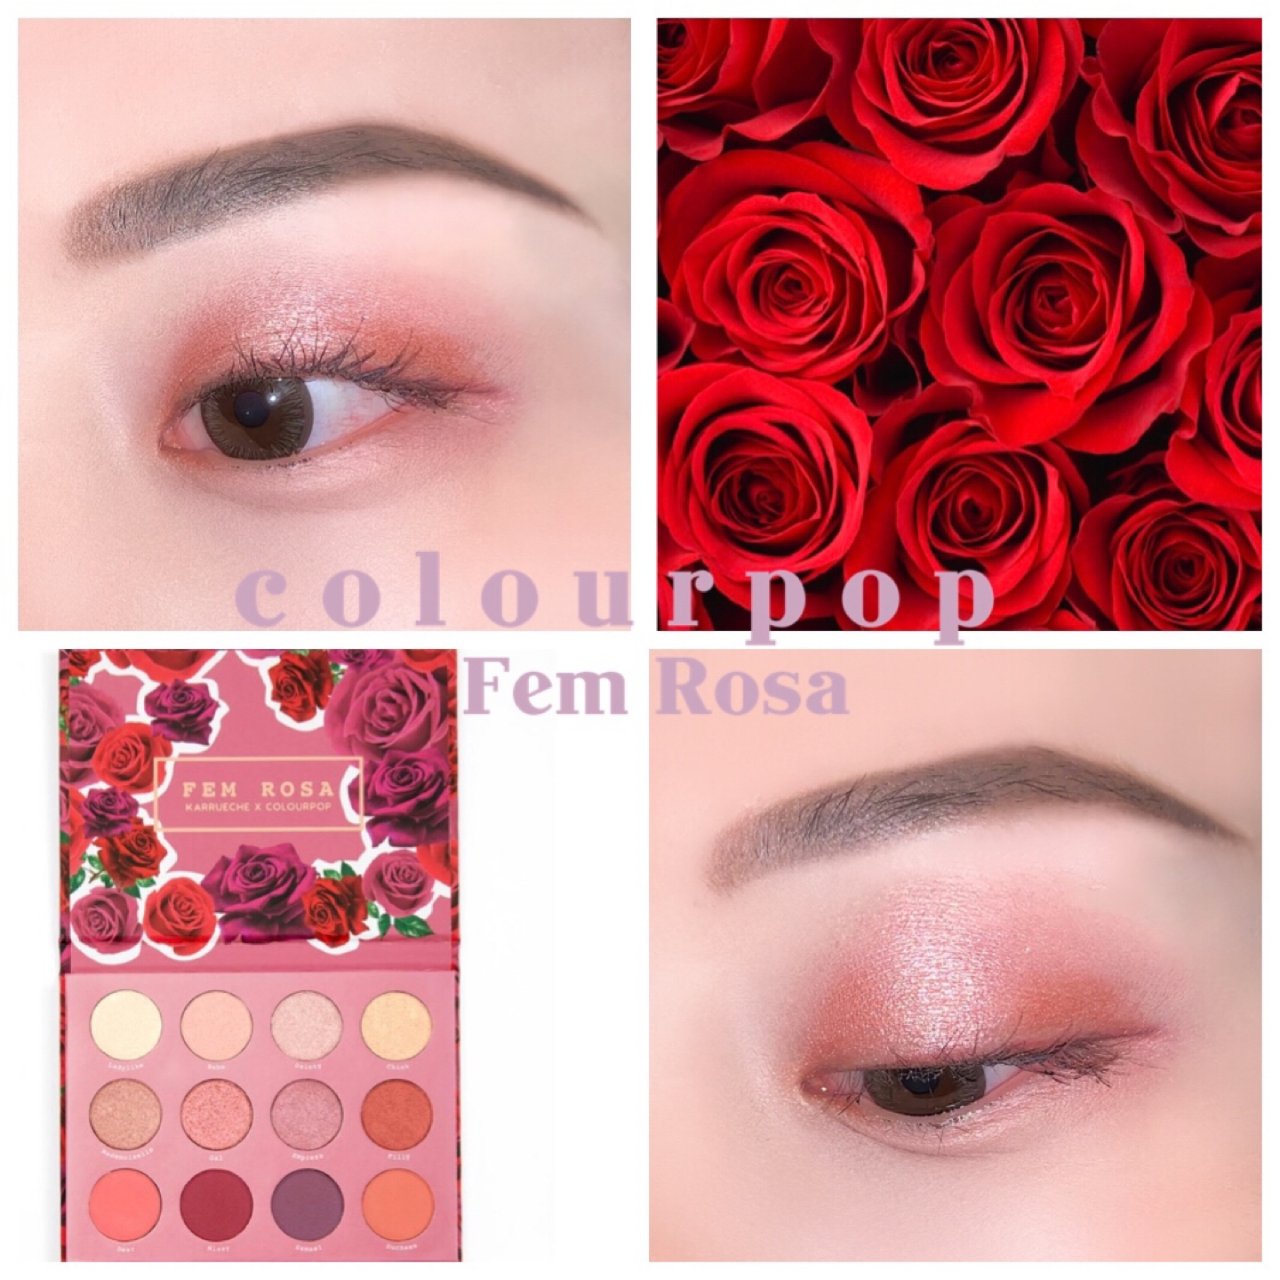 Colourpop,Colourpop eyeshadow,Fem Rosa,16美元